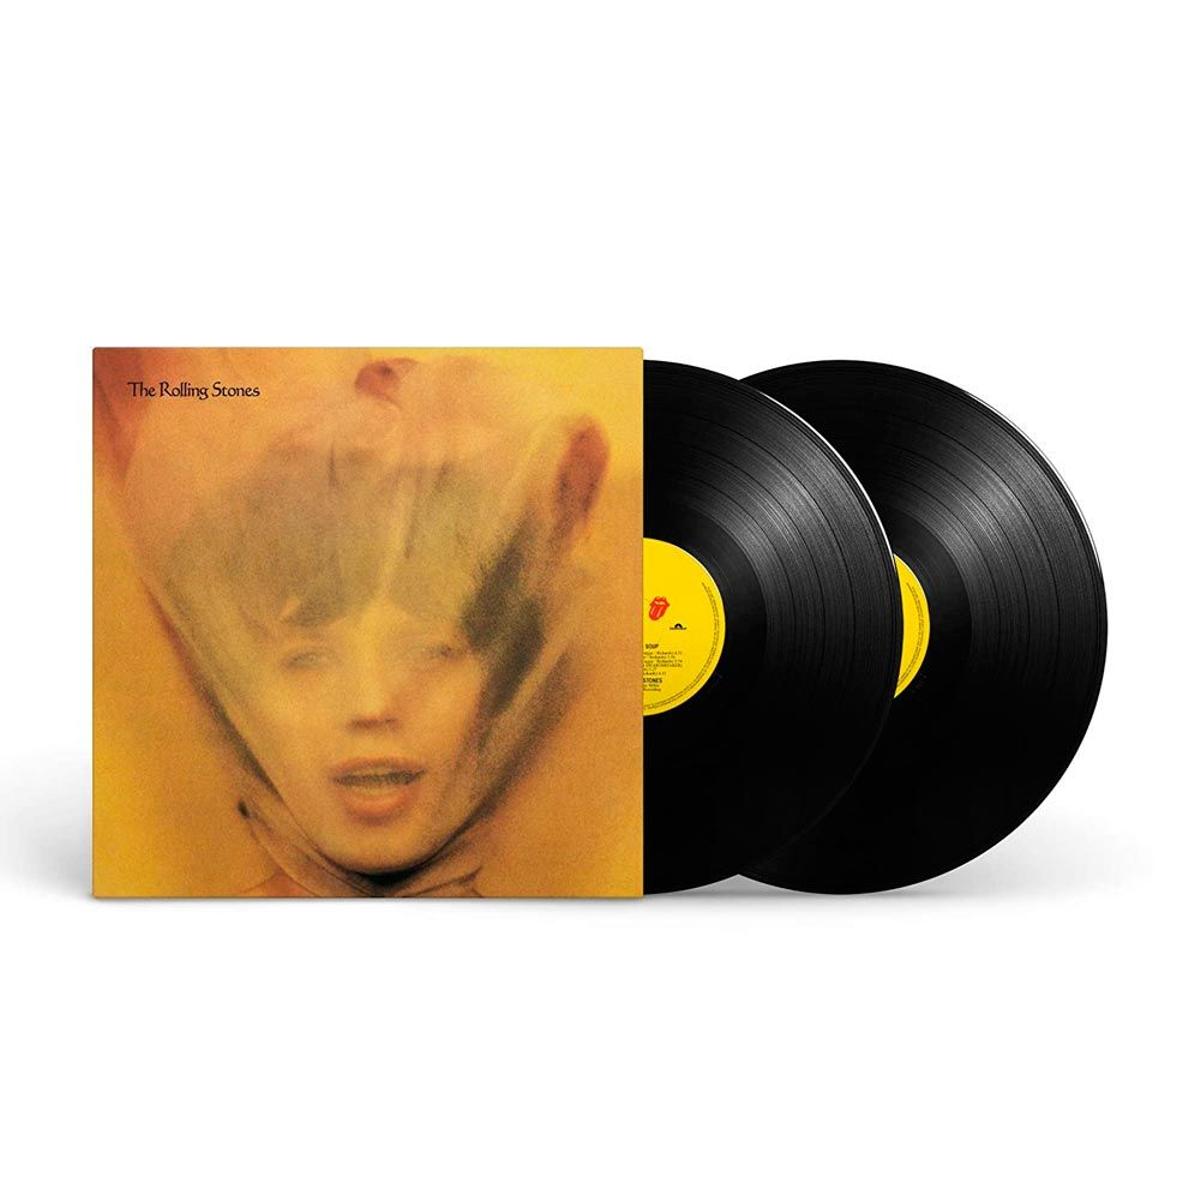 Vinilo 'Goats Head Soup - Edición Deluxe (2LP)' de The Rolling Stones. (Precio: 35,37 euros)